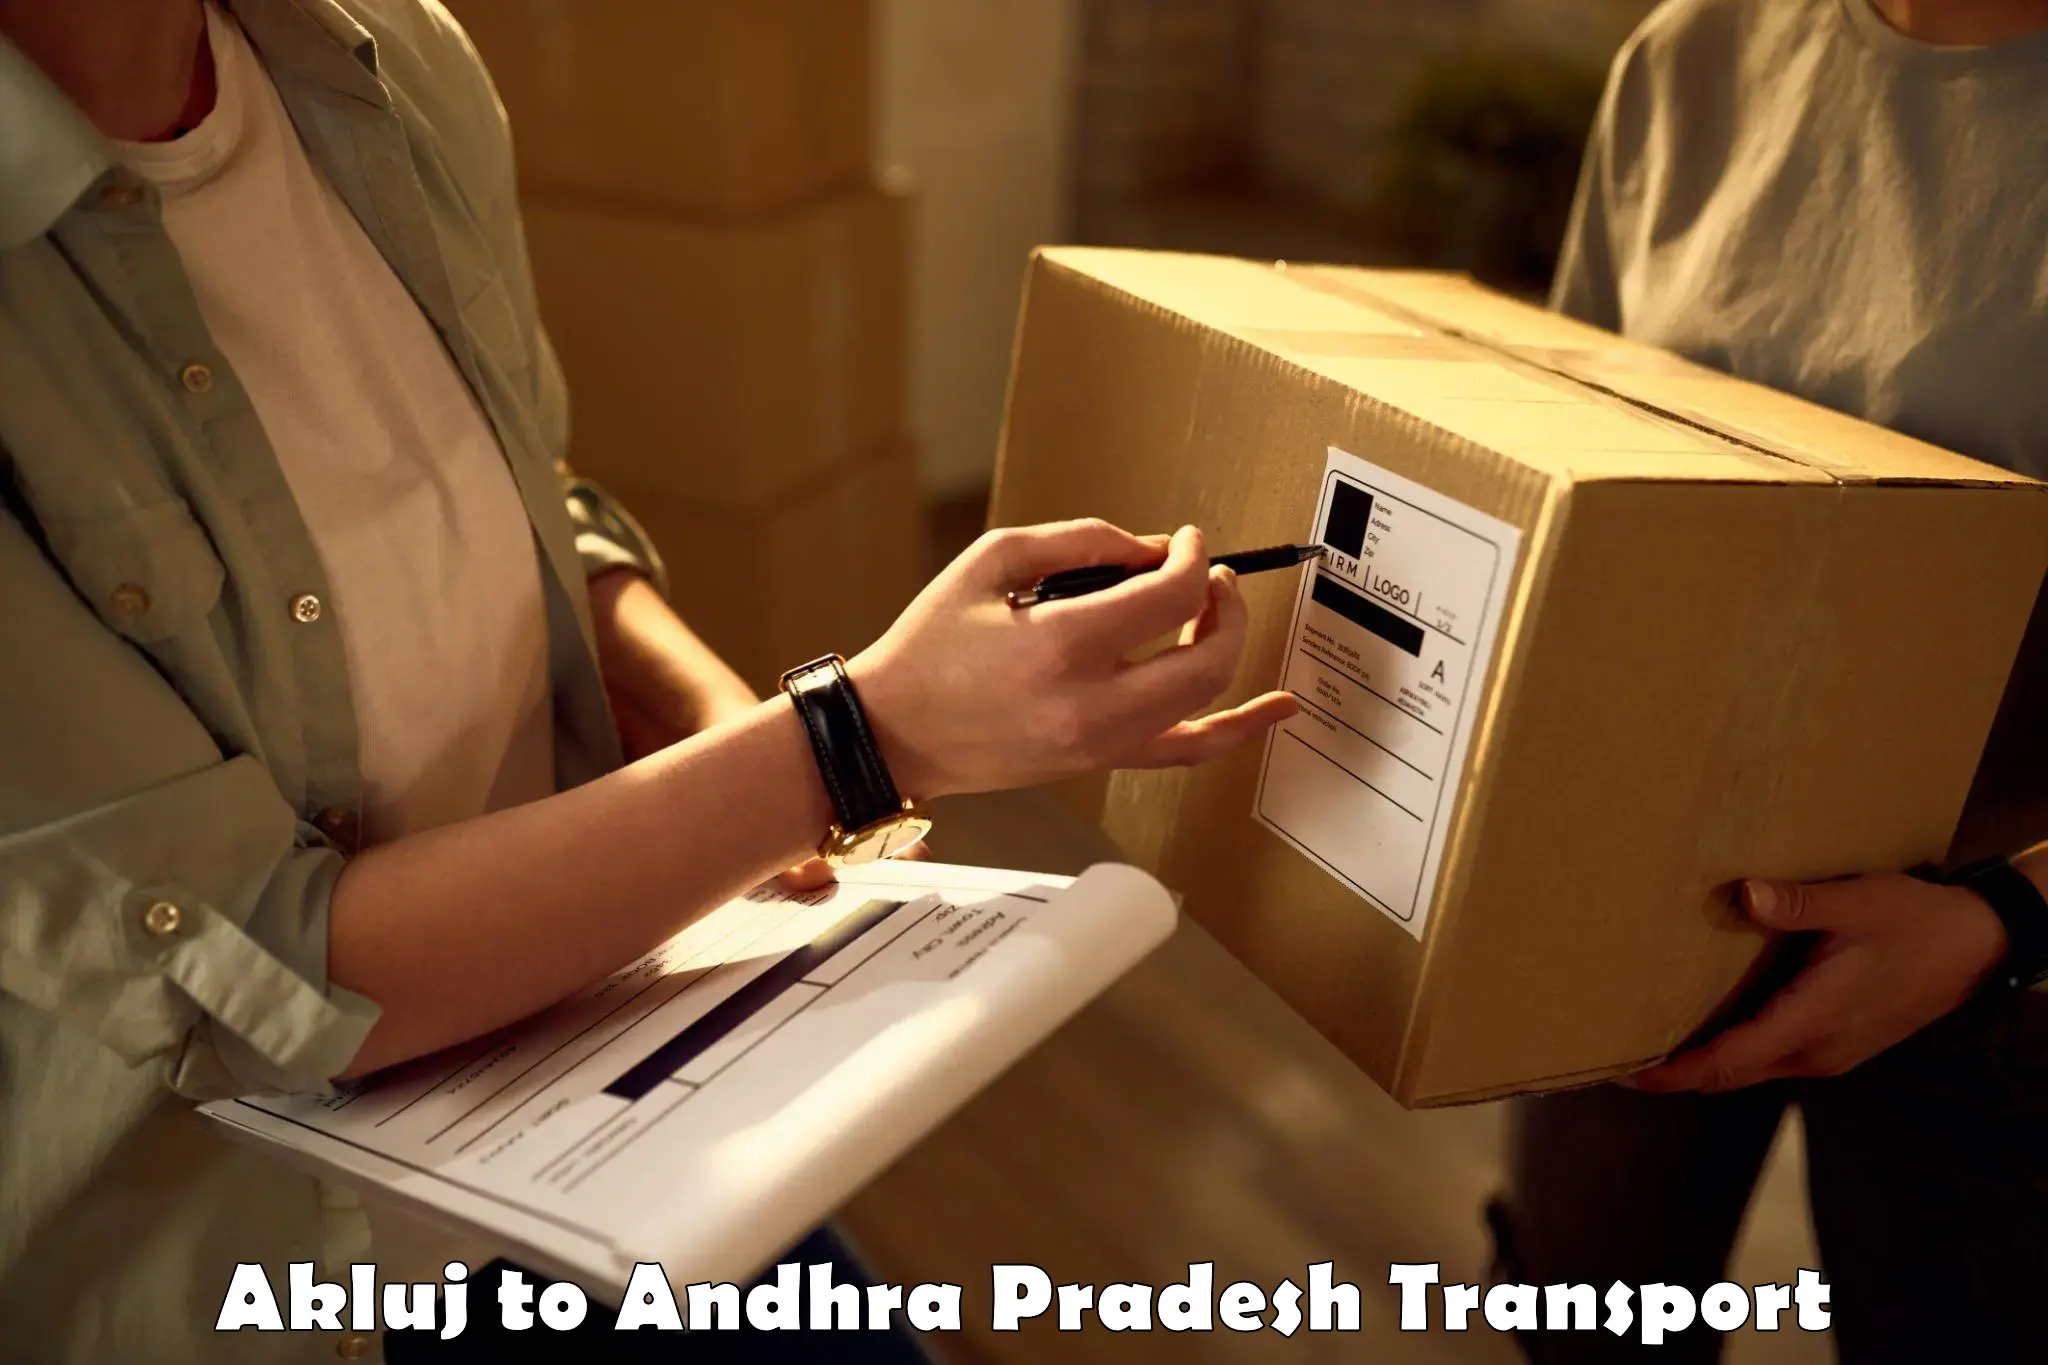 Sending bike to another city Akluj to Puttur Tirupati